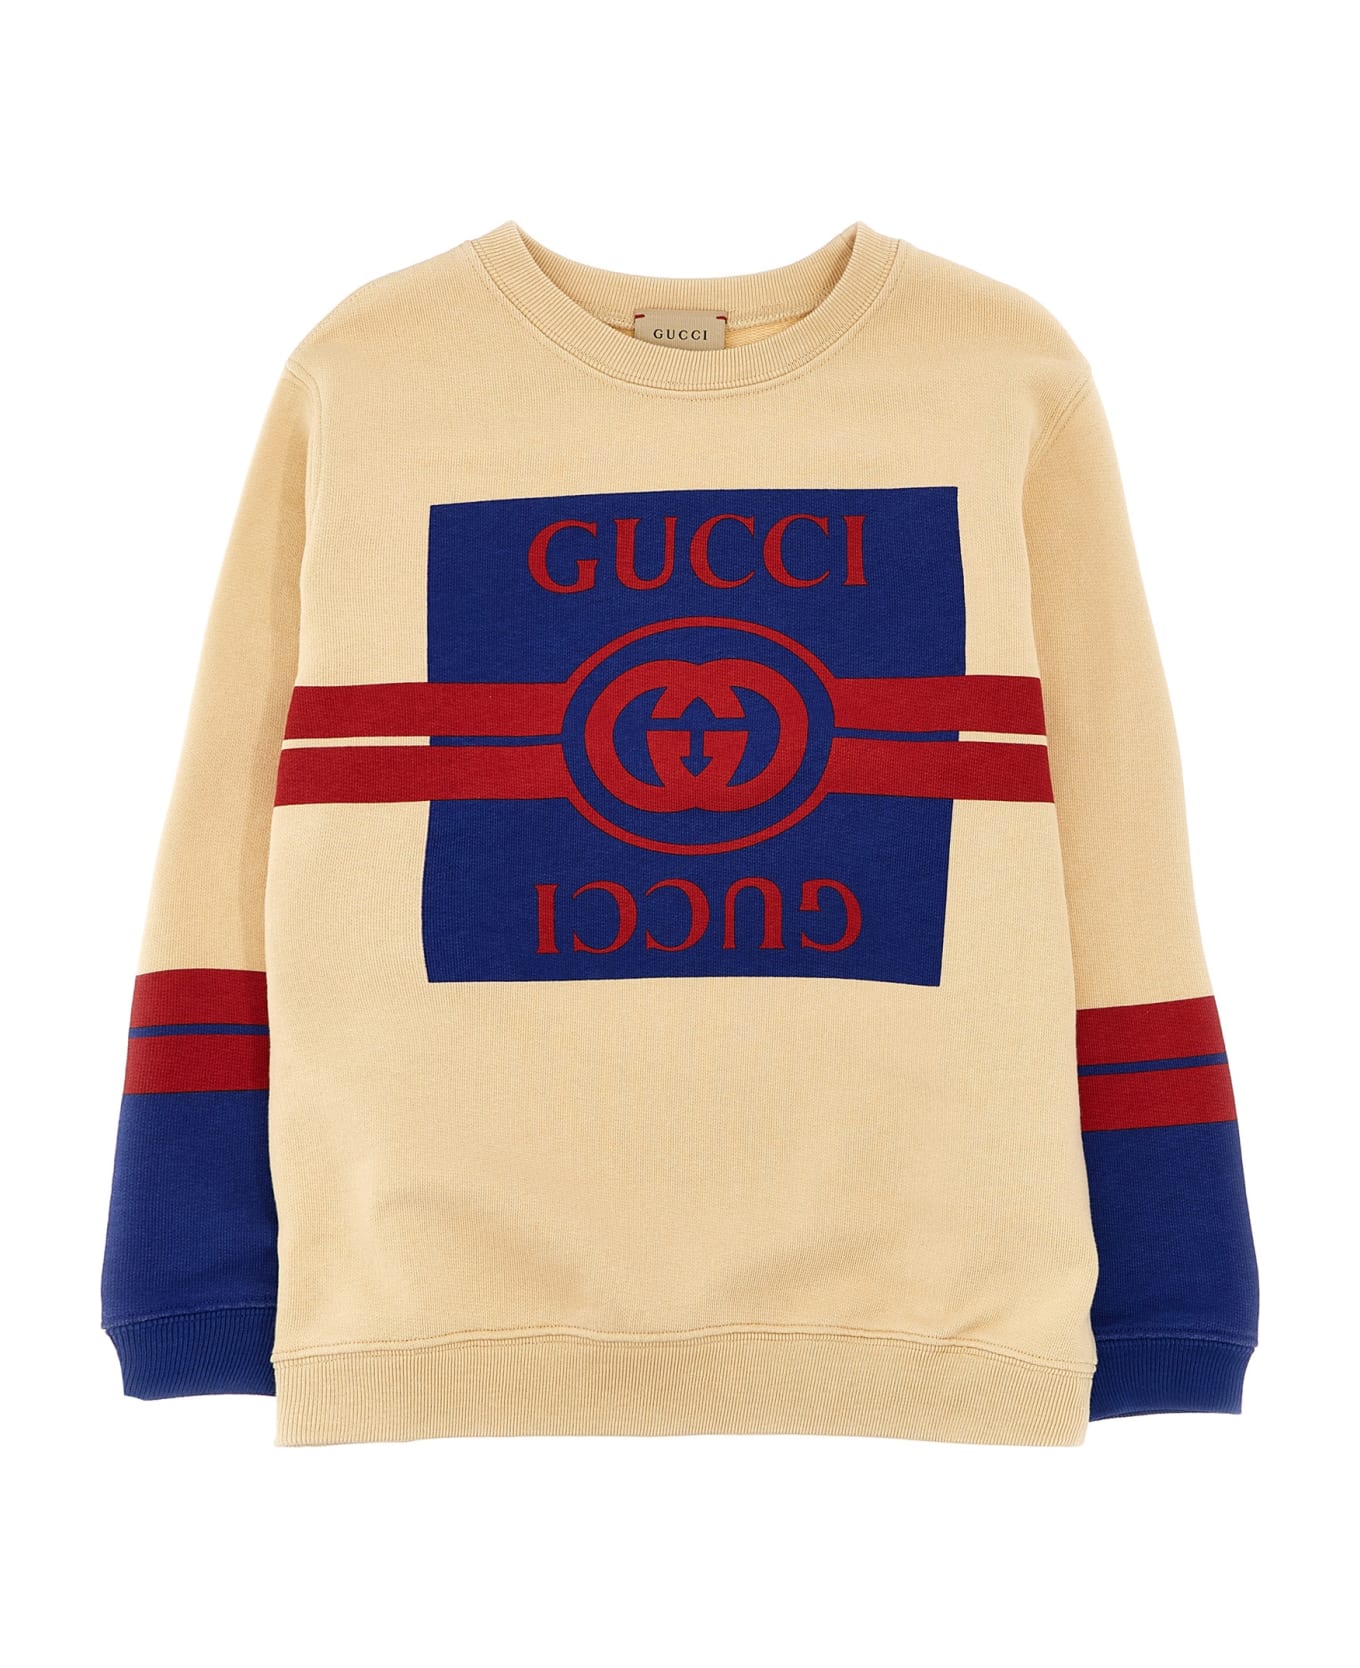 Gucci Logo Sweatshirt - Beige